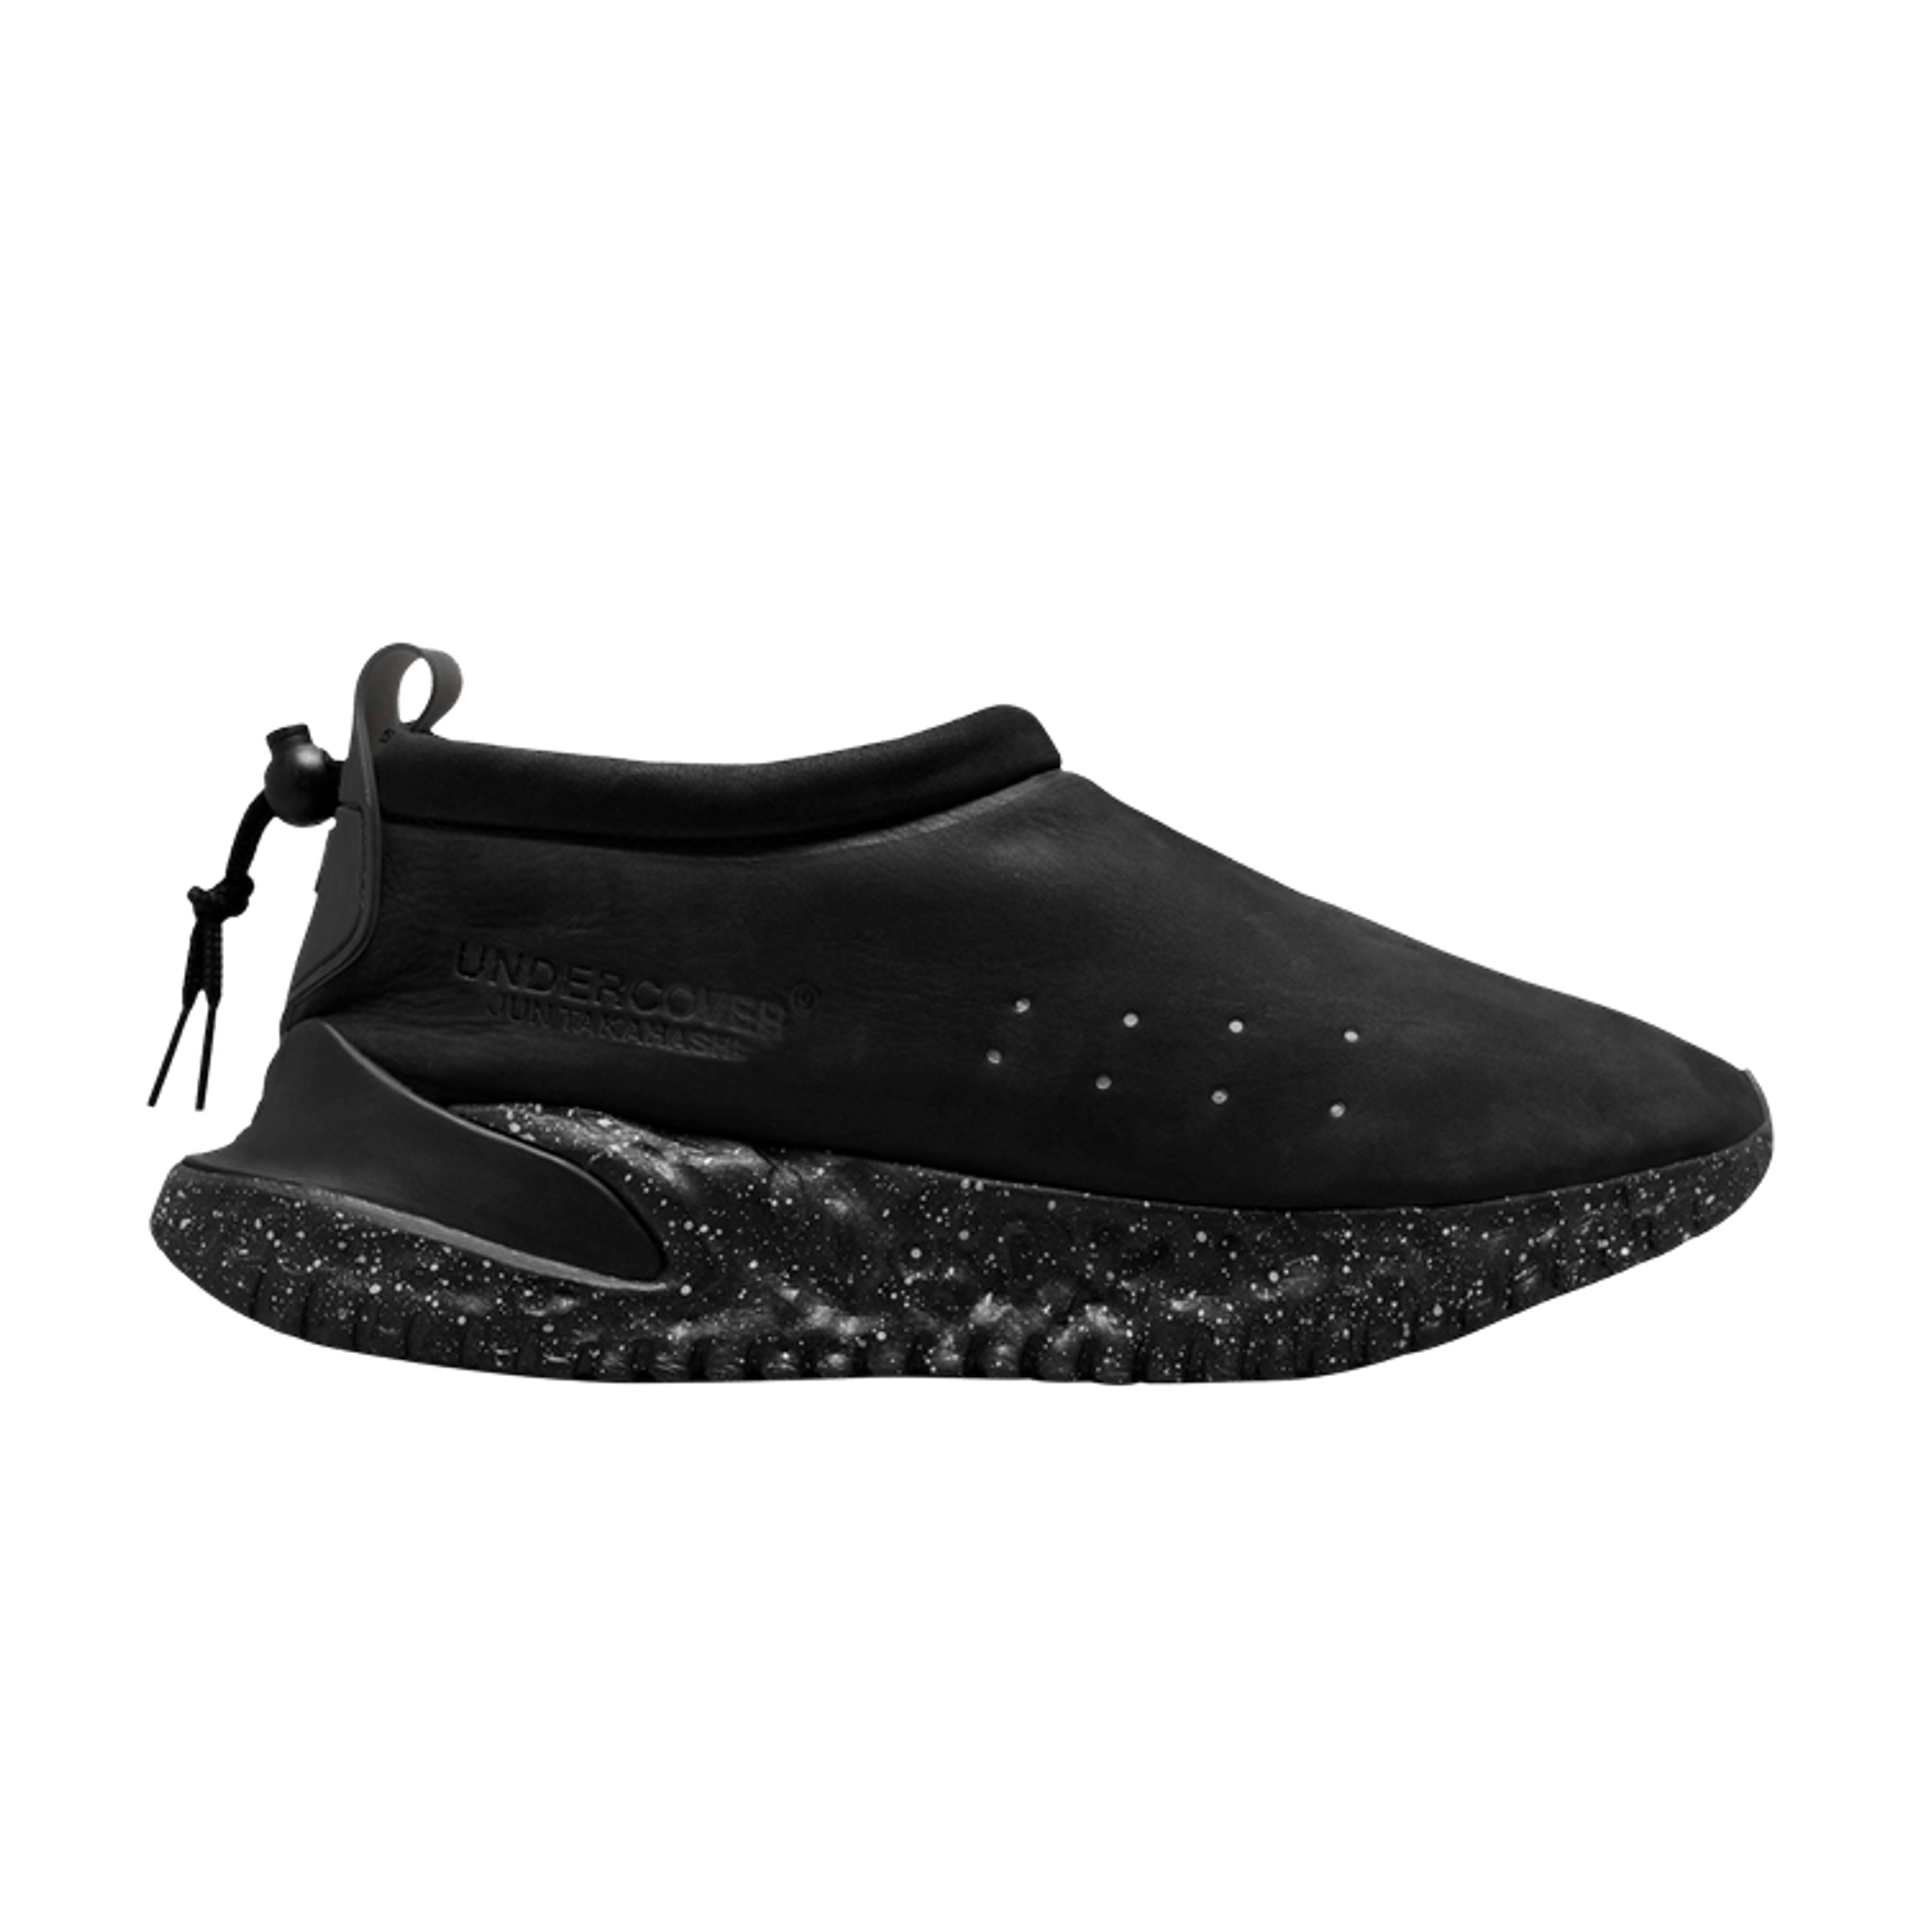 Undercover x Nike Moc Flow 'Black' - DV5593 002 | Ox Street